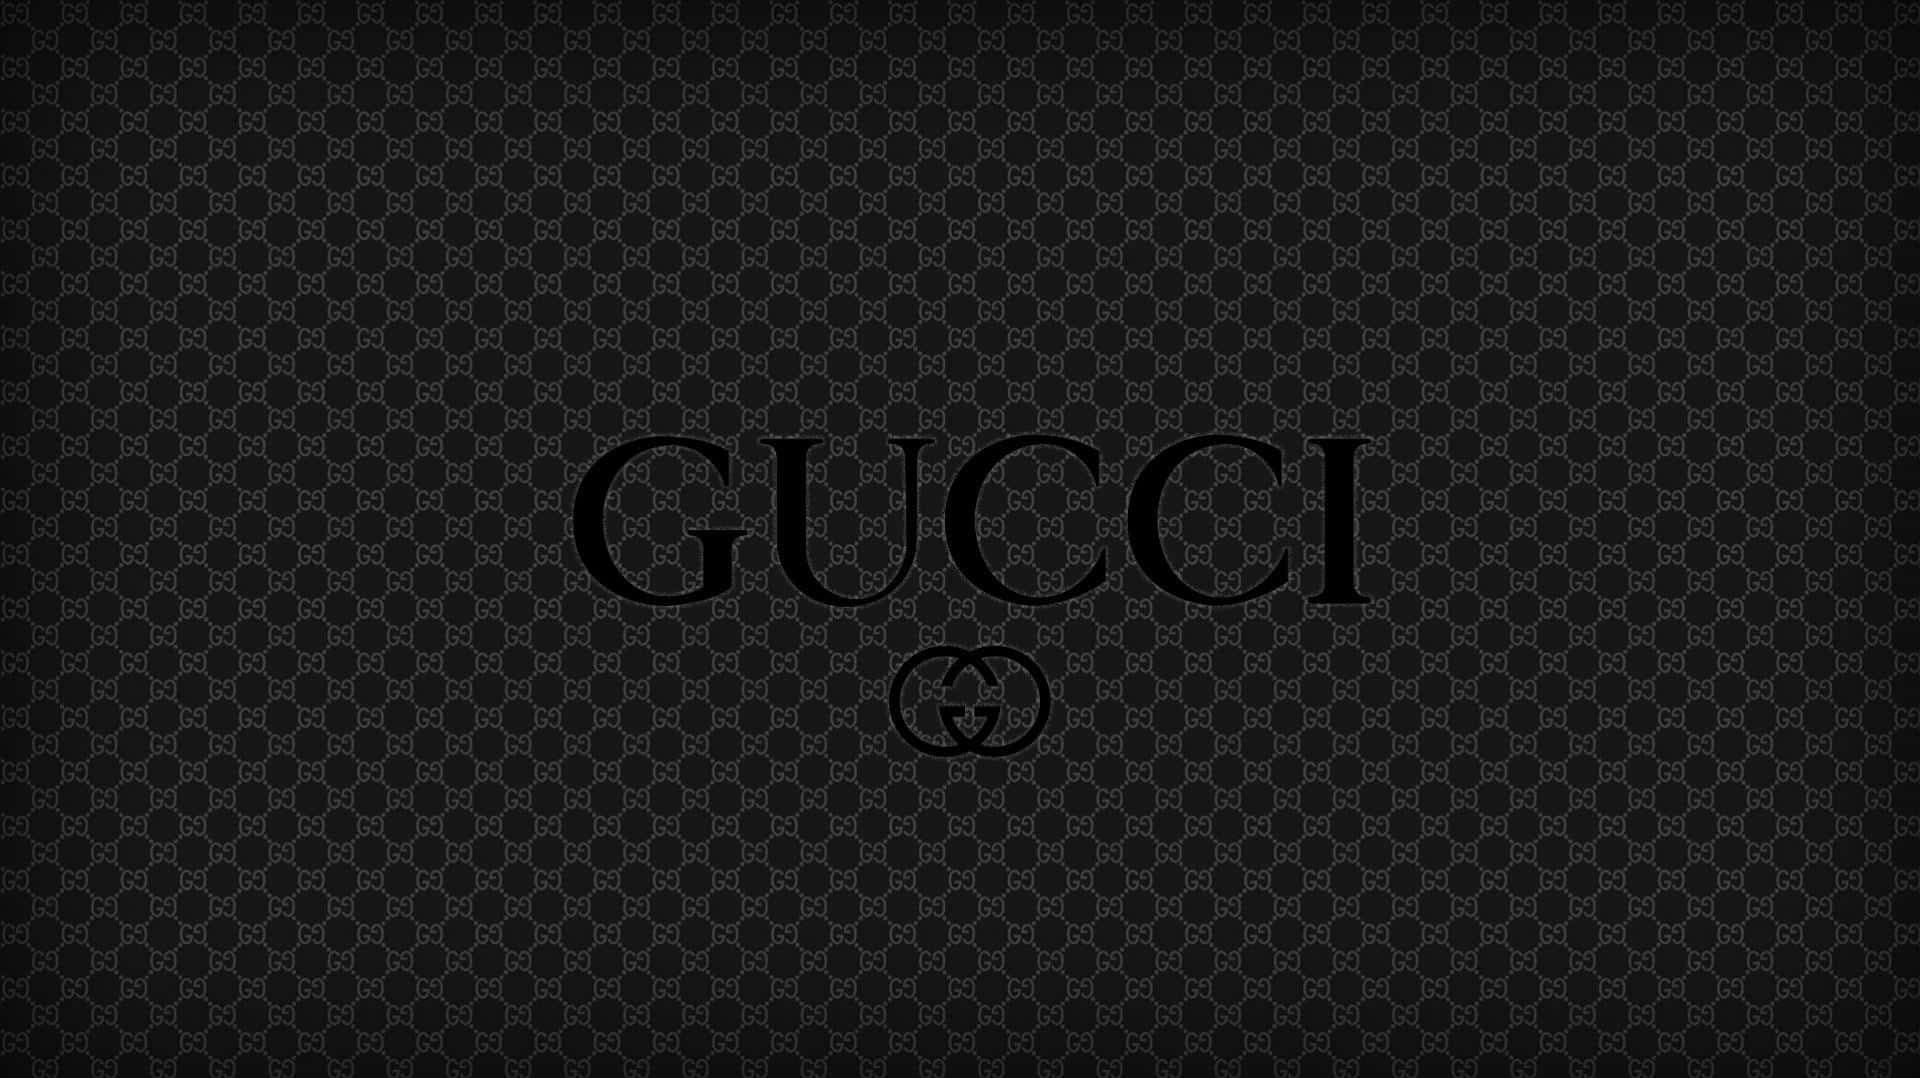 Expensive Gucci Logo Wallpaper